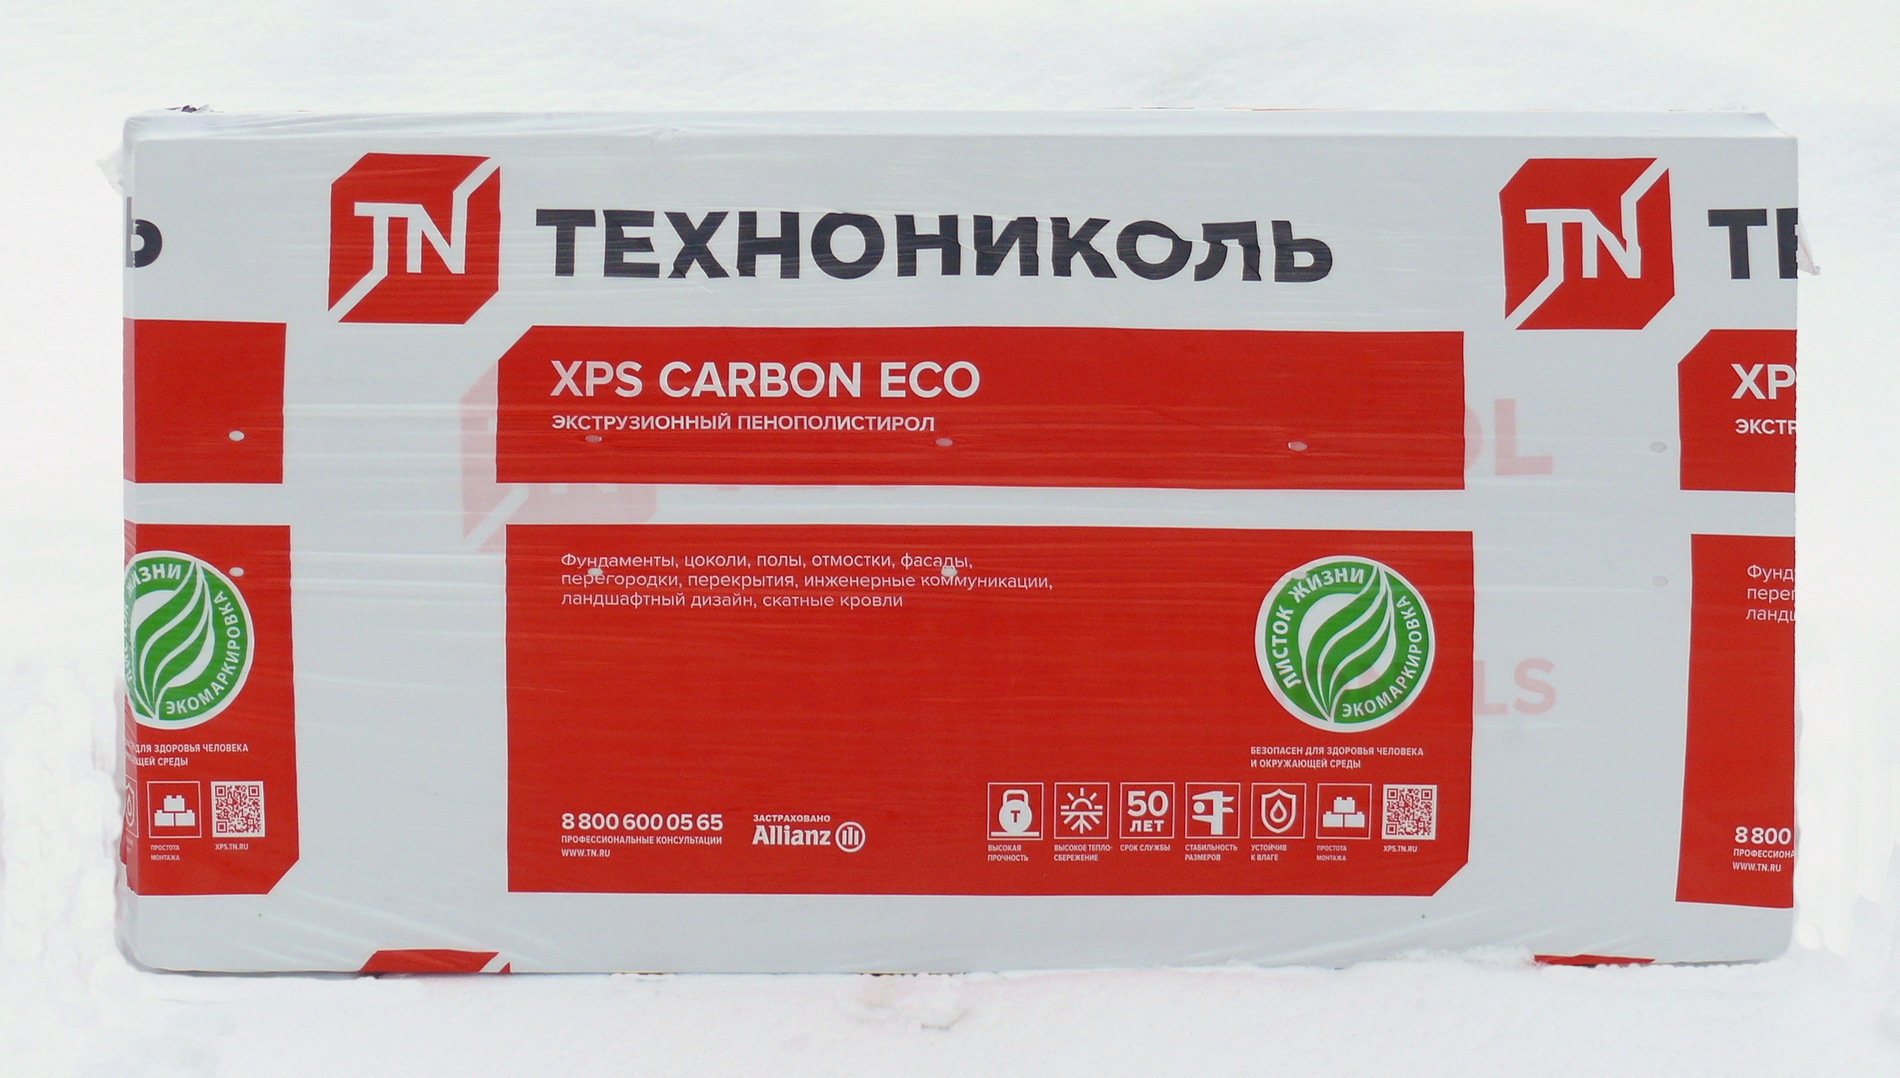 Carbon 50мм. Пенополистирол ТЕХНОНИКОЛЬ Carbon Eco 1180х580х50. Пенополистирол экструзионный XPS ТЕХНОНИКОЛЬ Carbon Eco (1180х580х50)х8. ТЕХНОНИКОЛЬ XPS Carbon Eco 1180х580х50-l, 0,27376 м3. ТЕХНОНИКОЛЬ XPS Carbon Eco 50мм.